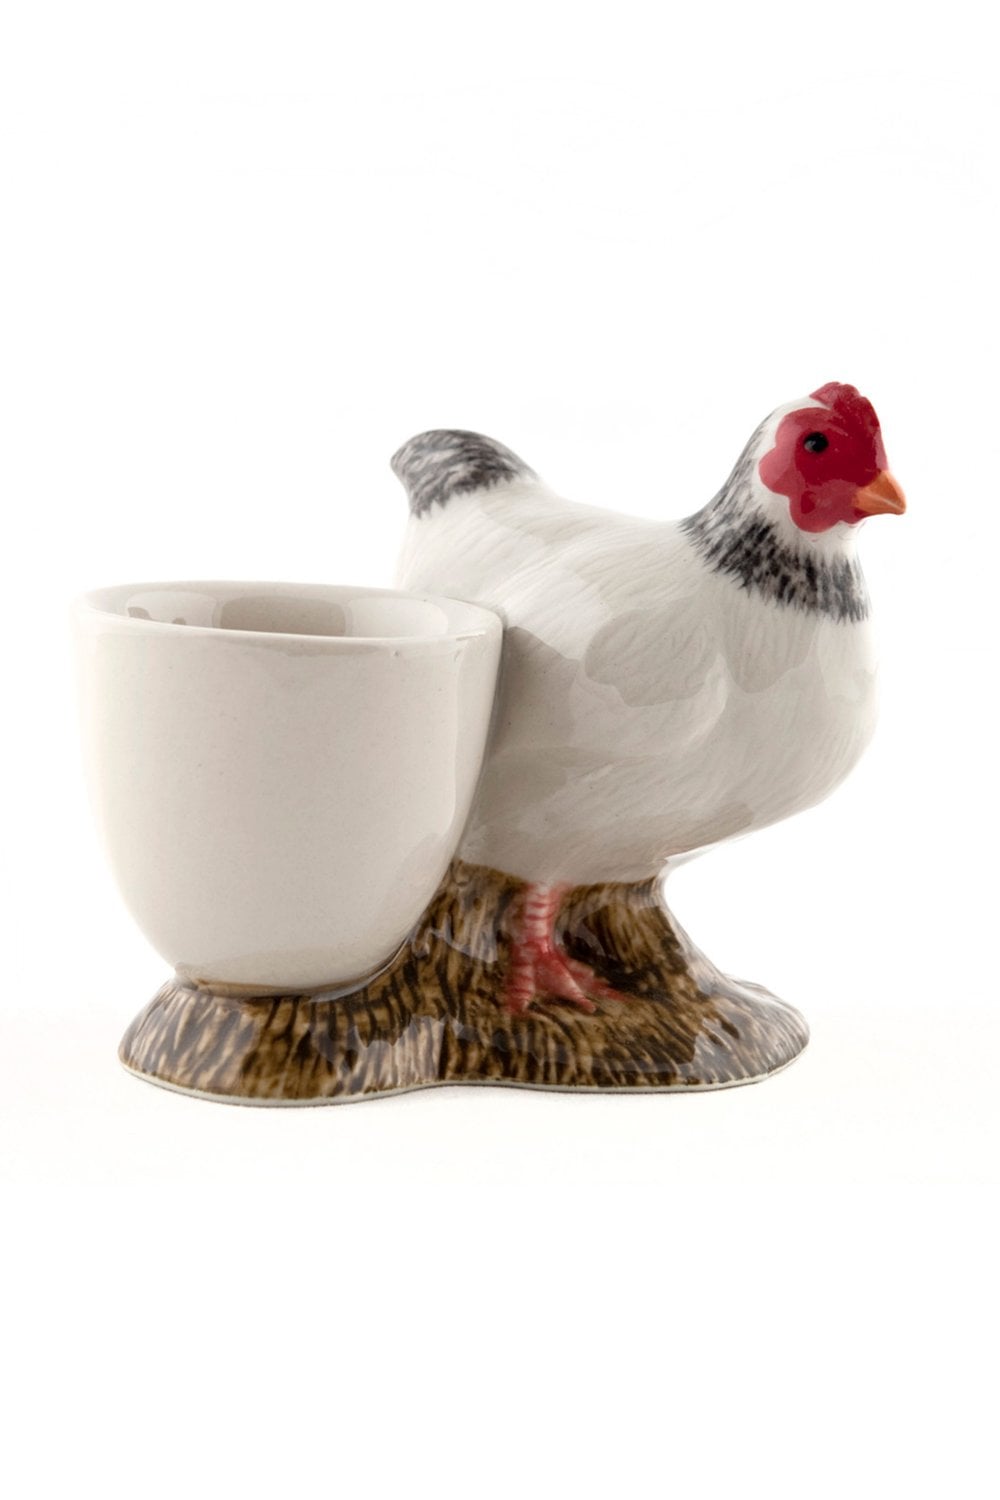 Quail Ceramics Light Sussex With Egg Cup